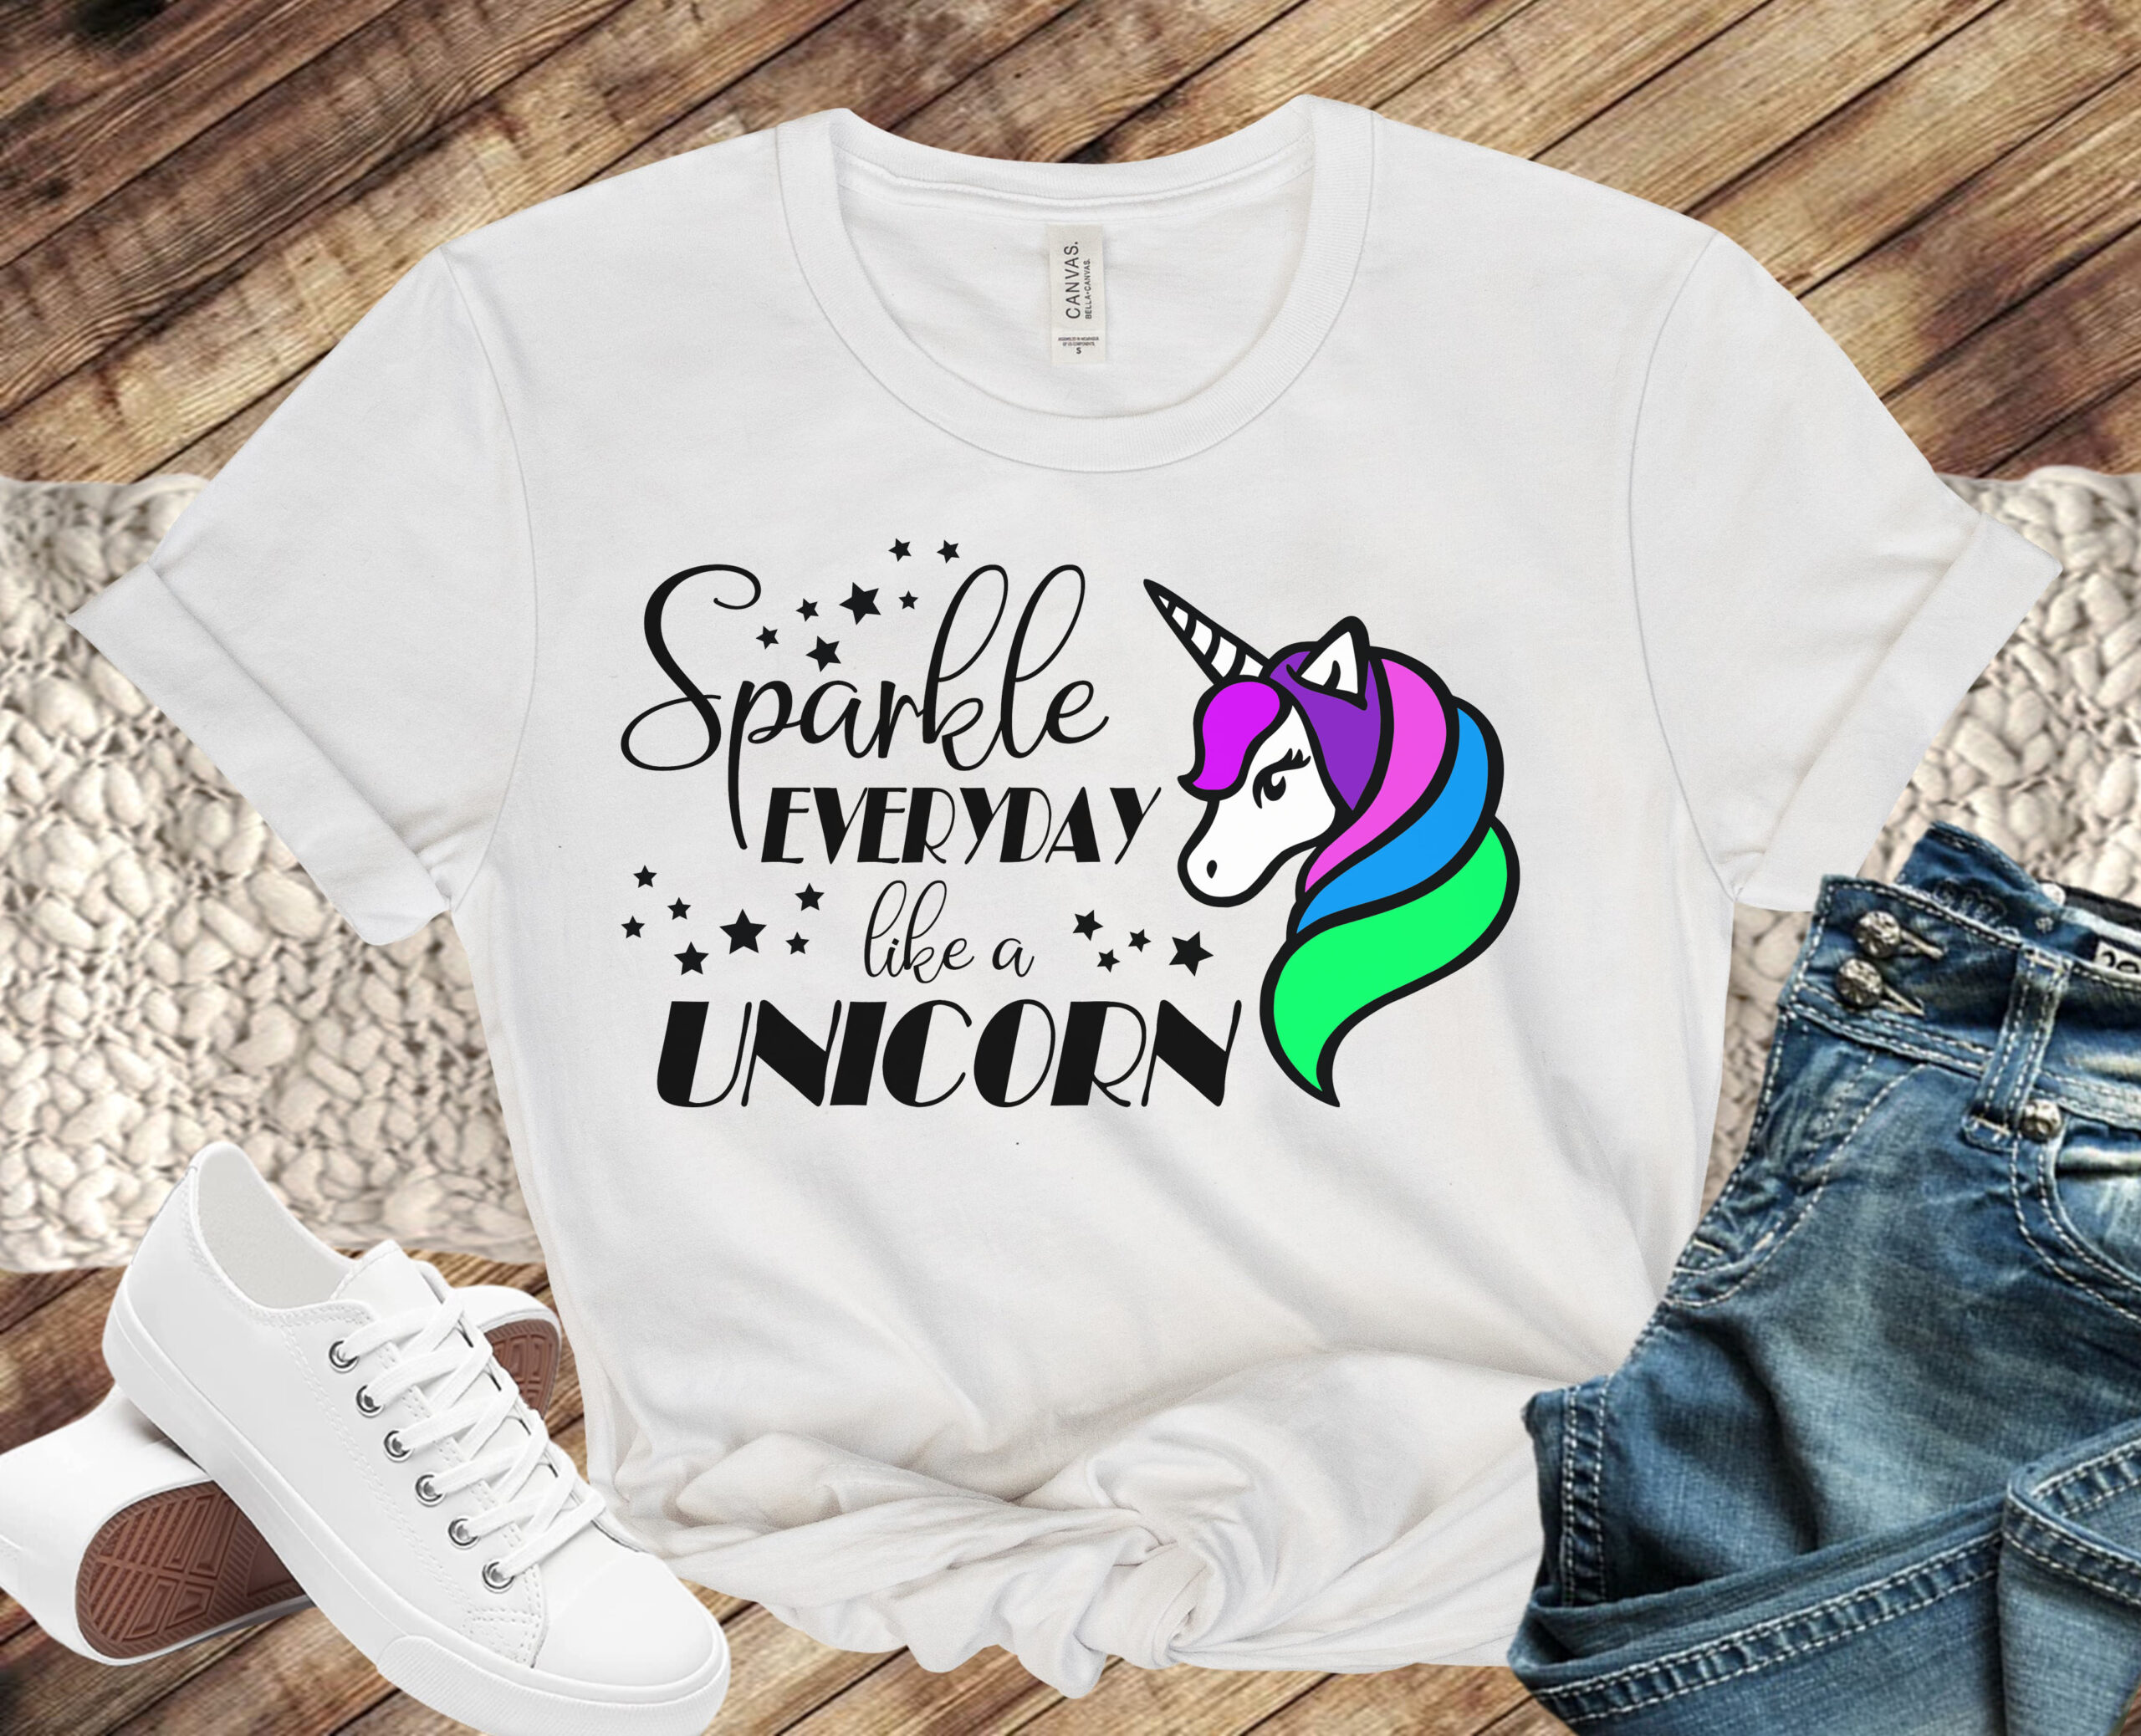 Free Sparkle Everyday like a Unicorn SVG File